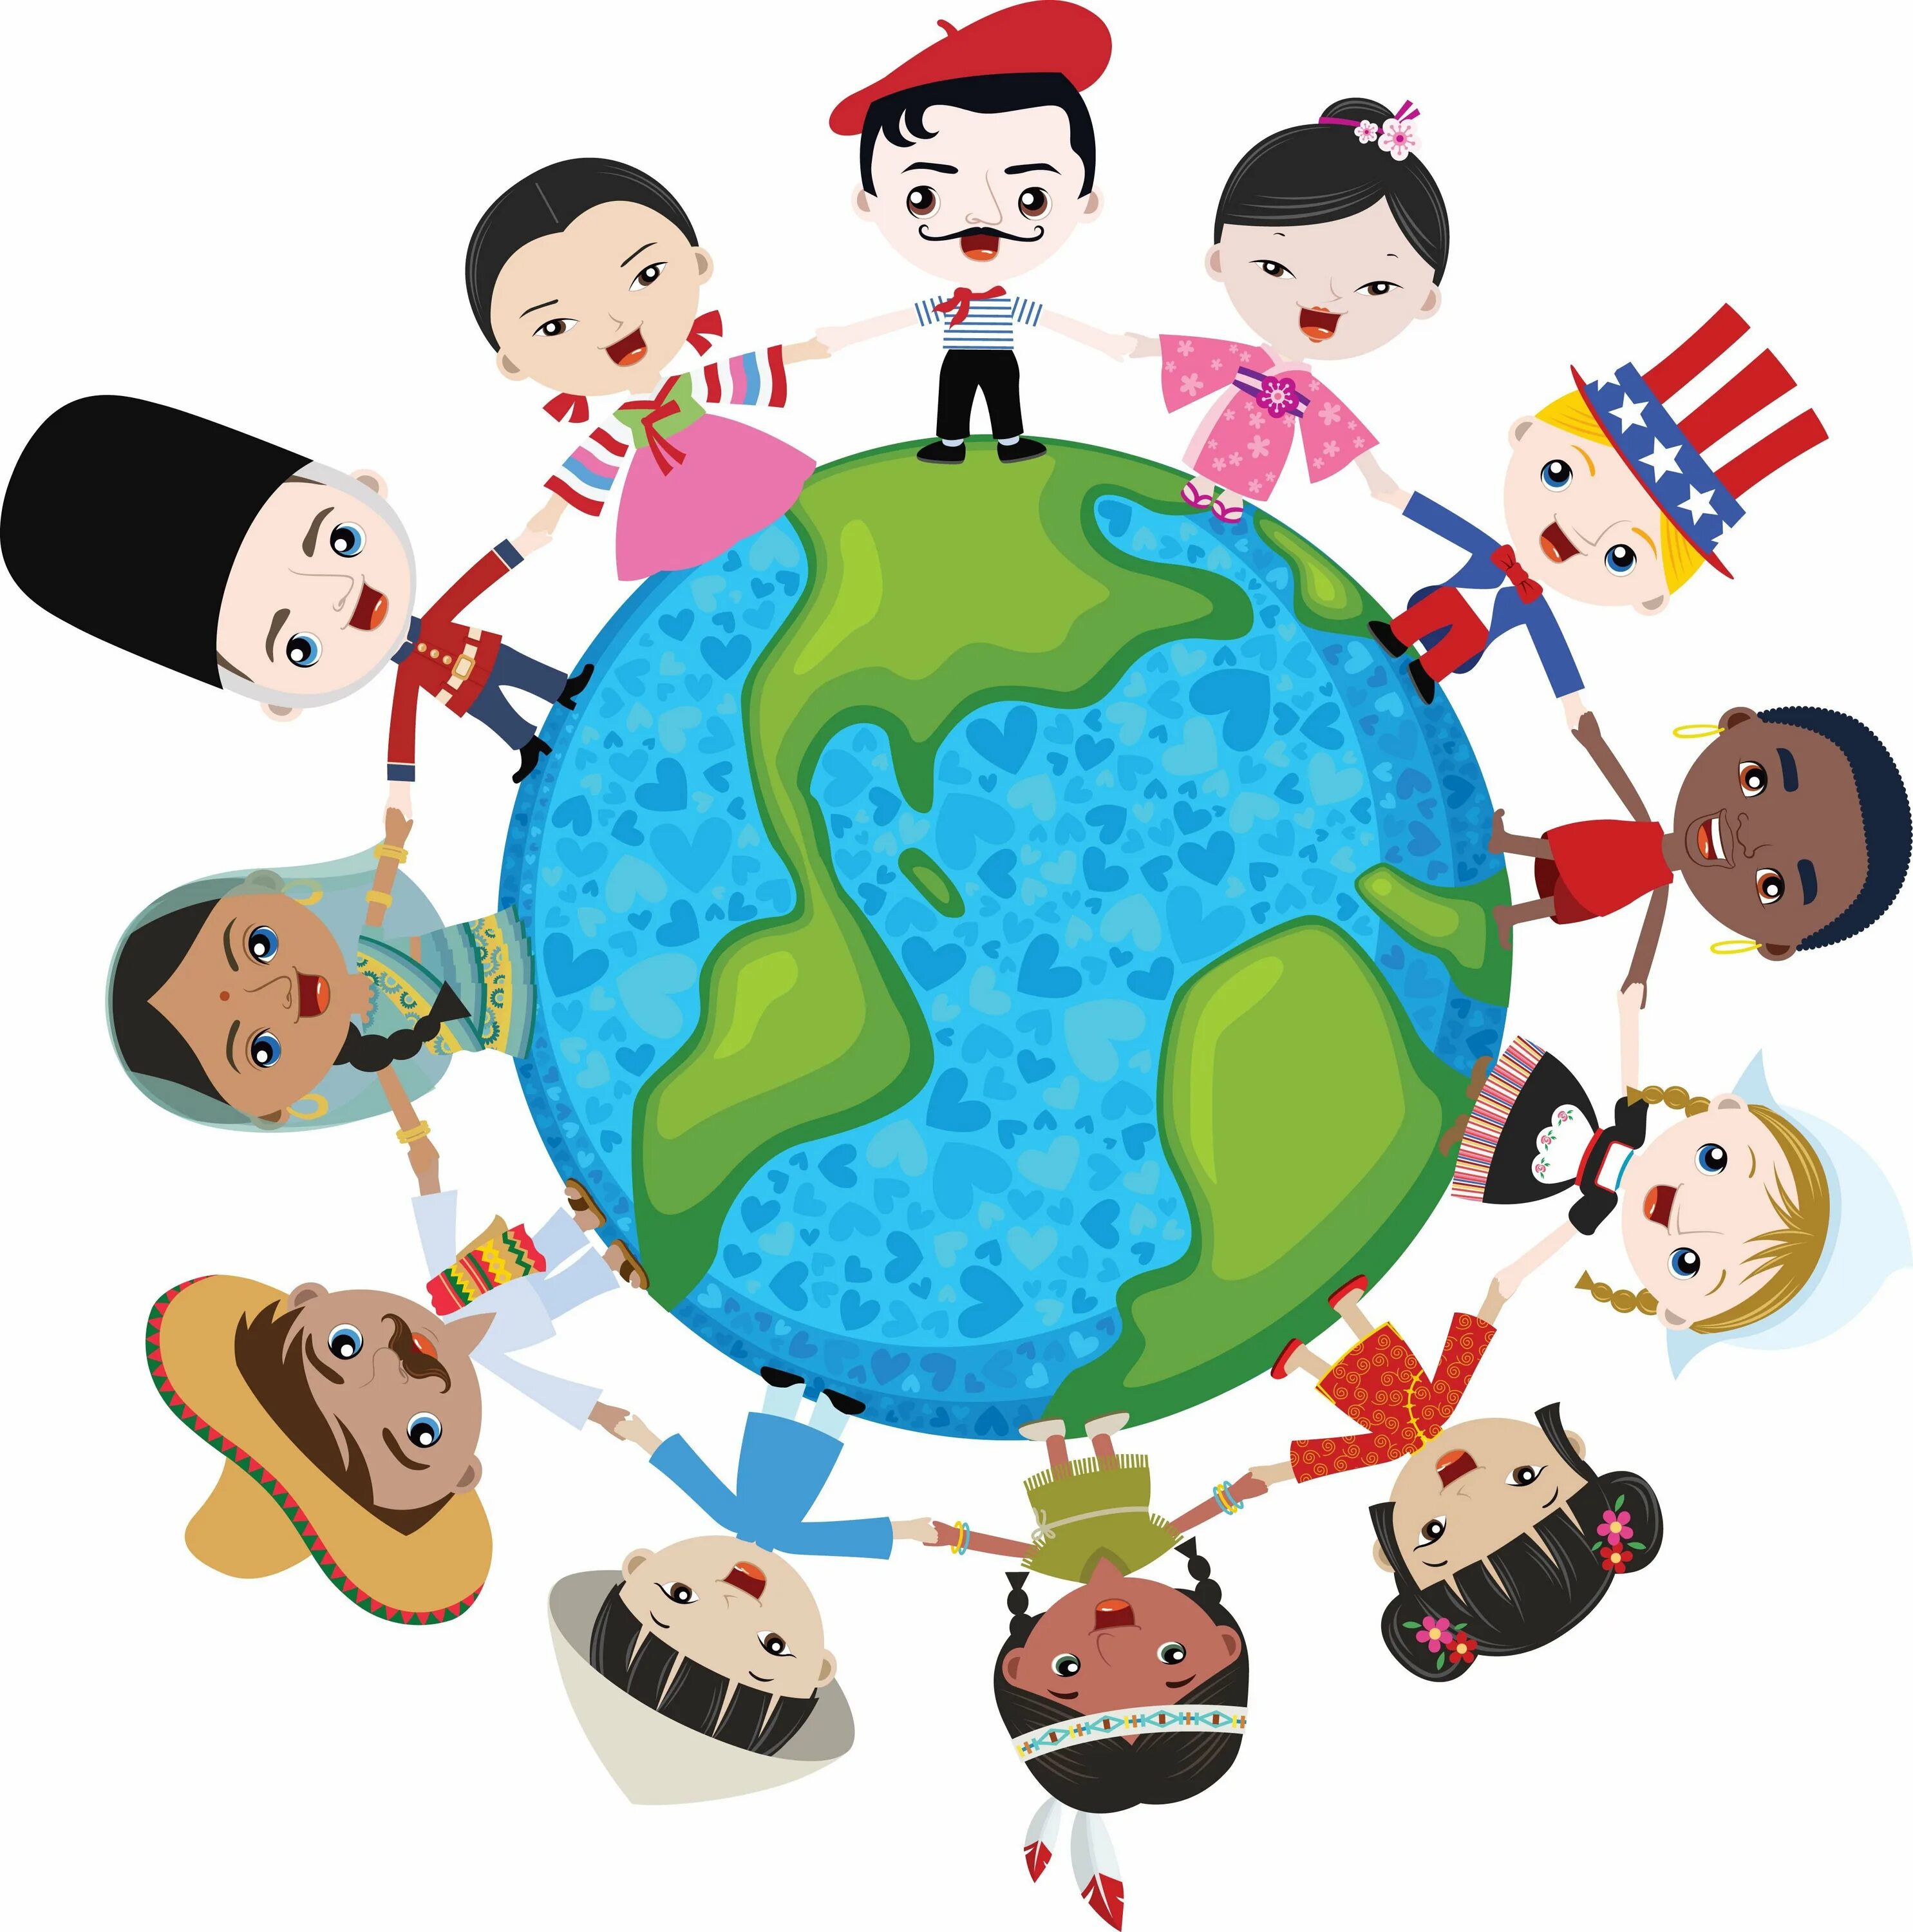 Дружба между странами. Дружба народов на земном шаре. Дети на земном шаре. Разные нации на земном шаре. Дети разных народов вокруг земного шара.